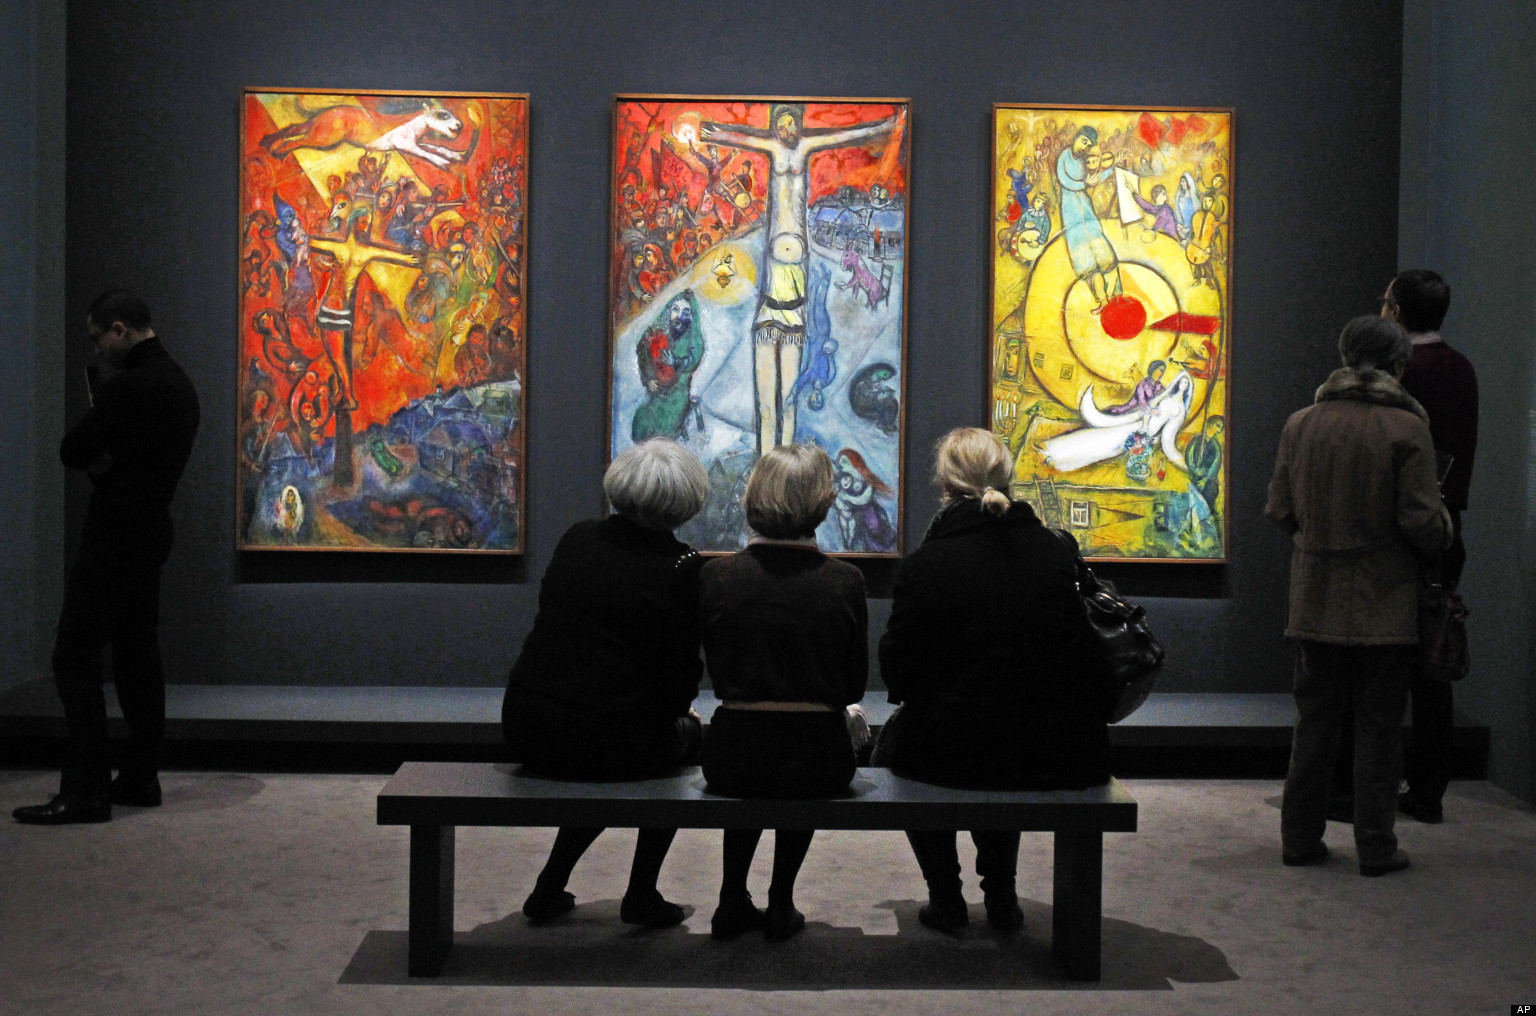 France Chagall Exhibit